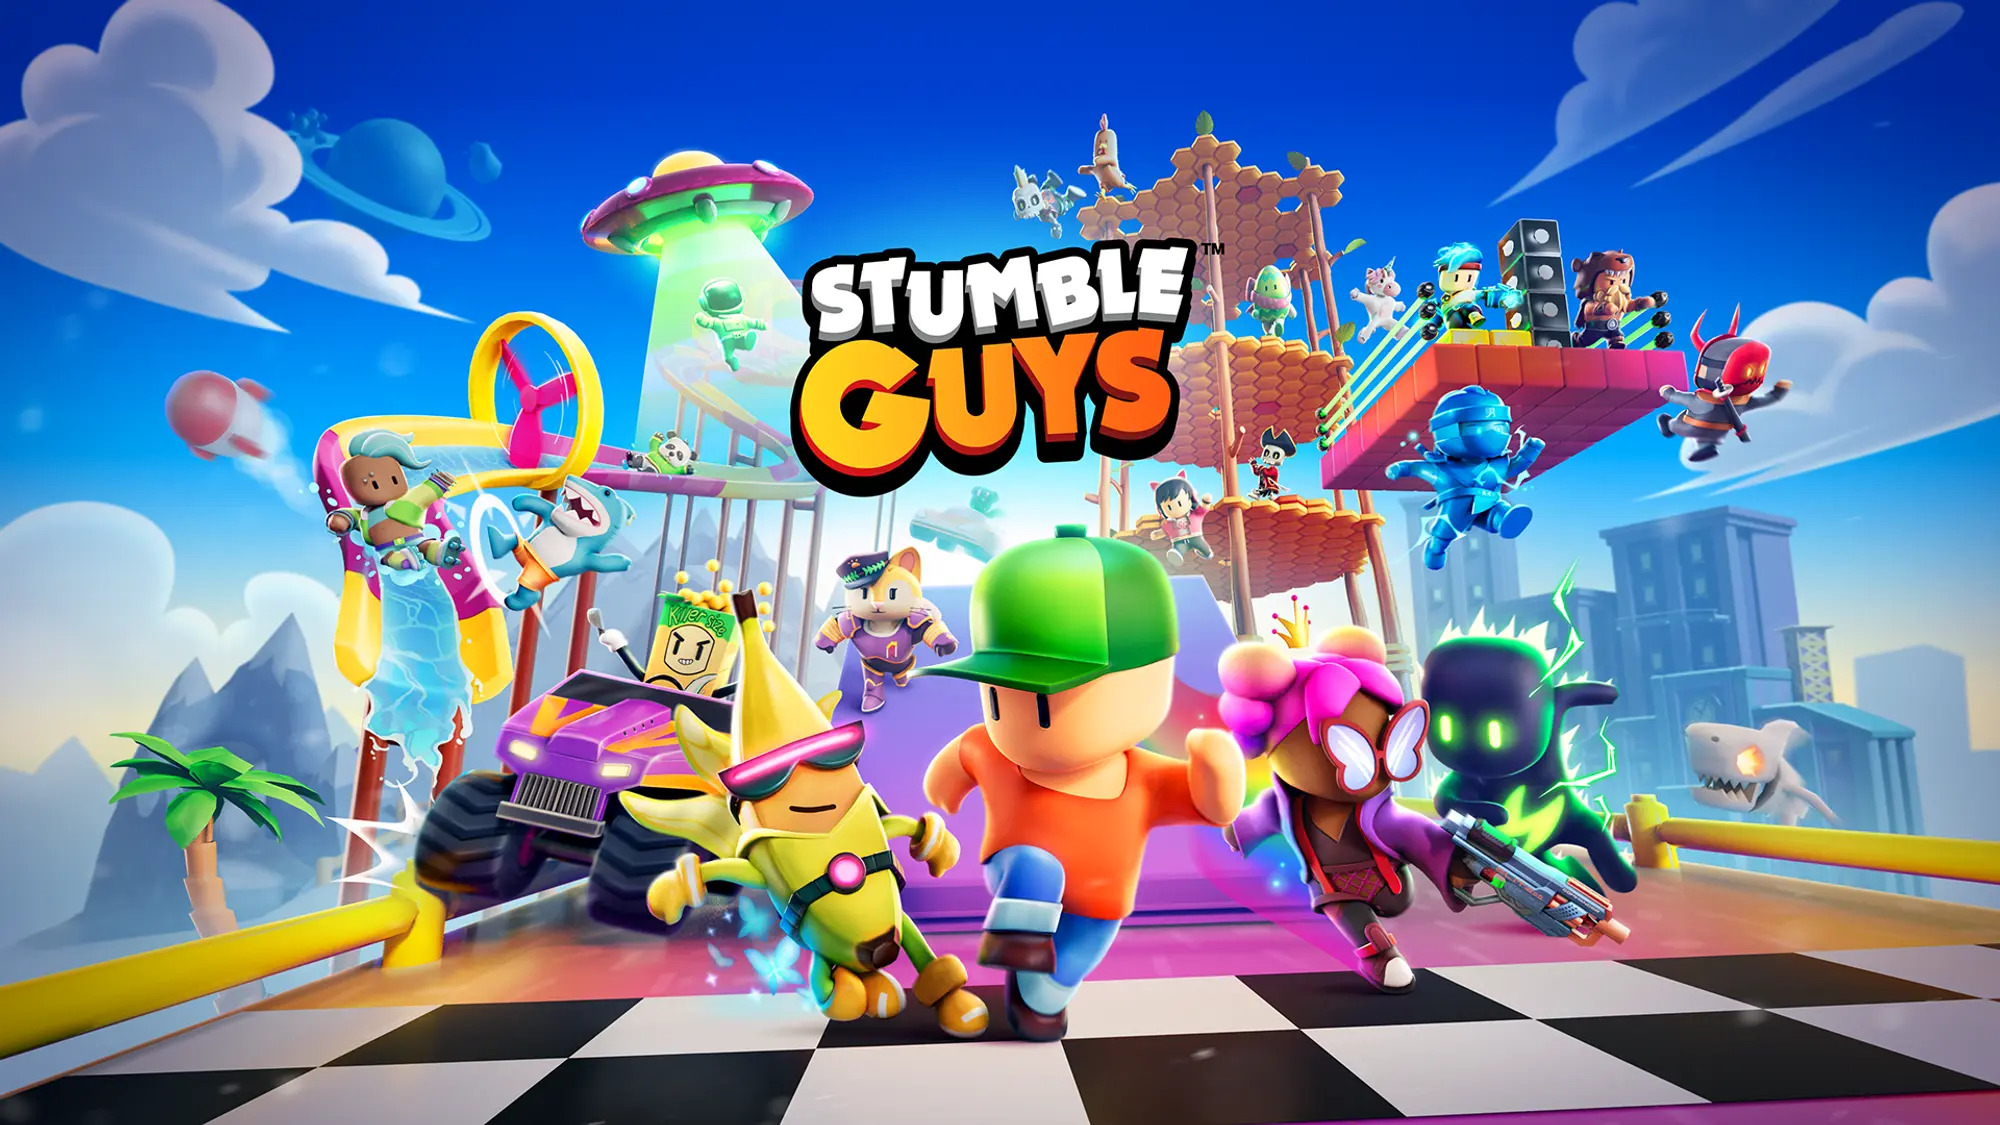 Stumble Guys: Multiplayer Royale a Fallguys clone for Mobile